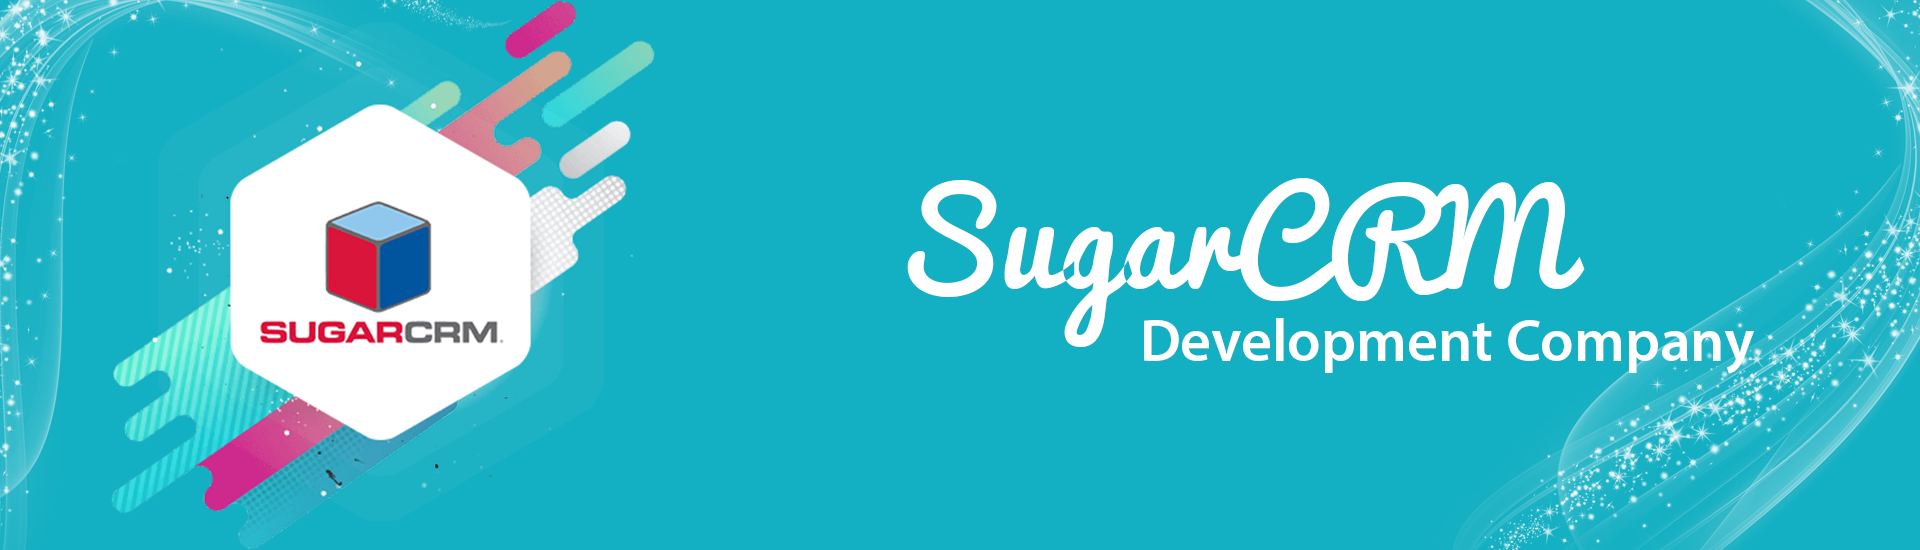 sugarcrm development